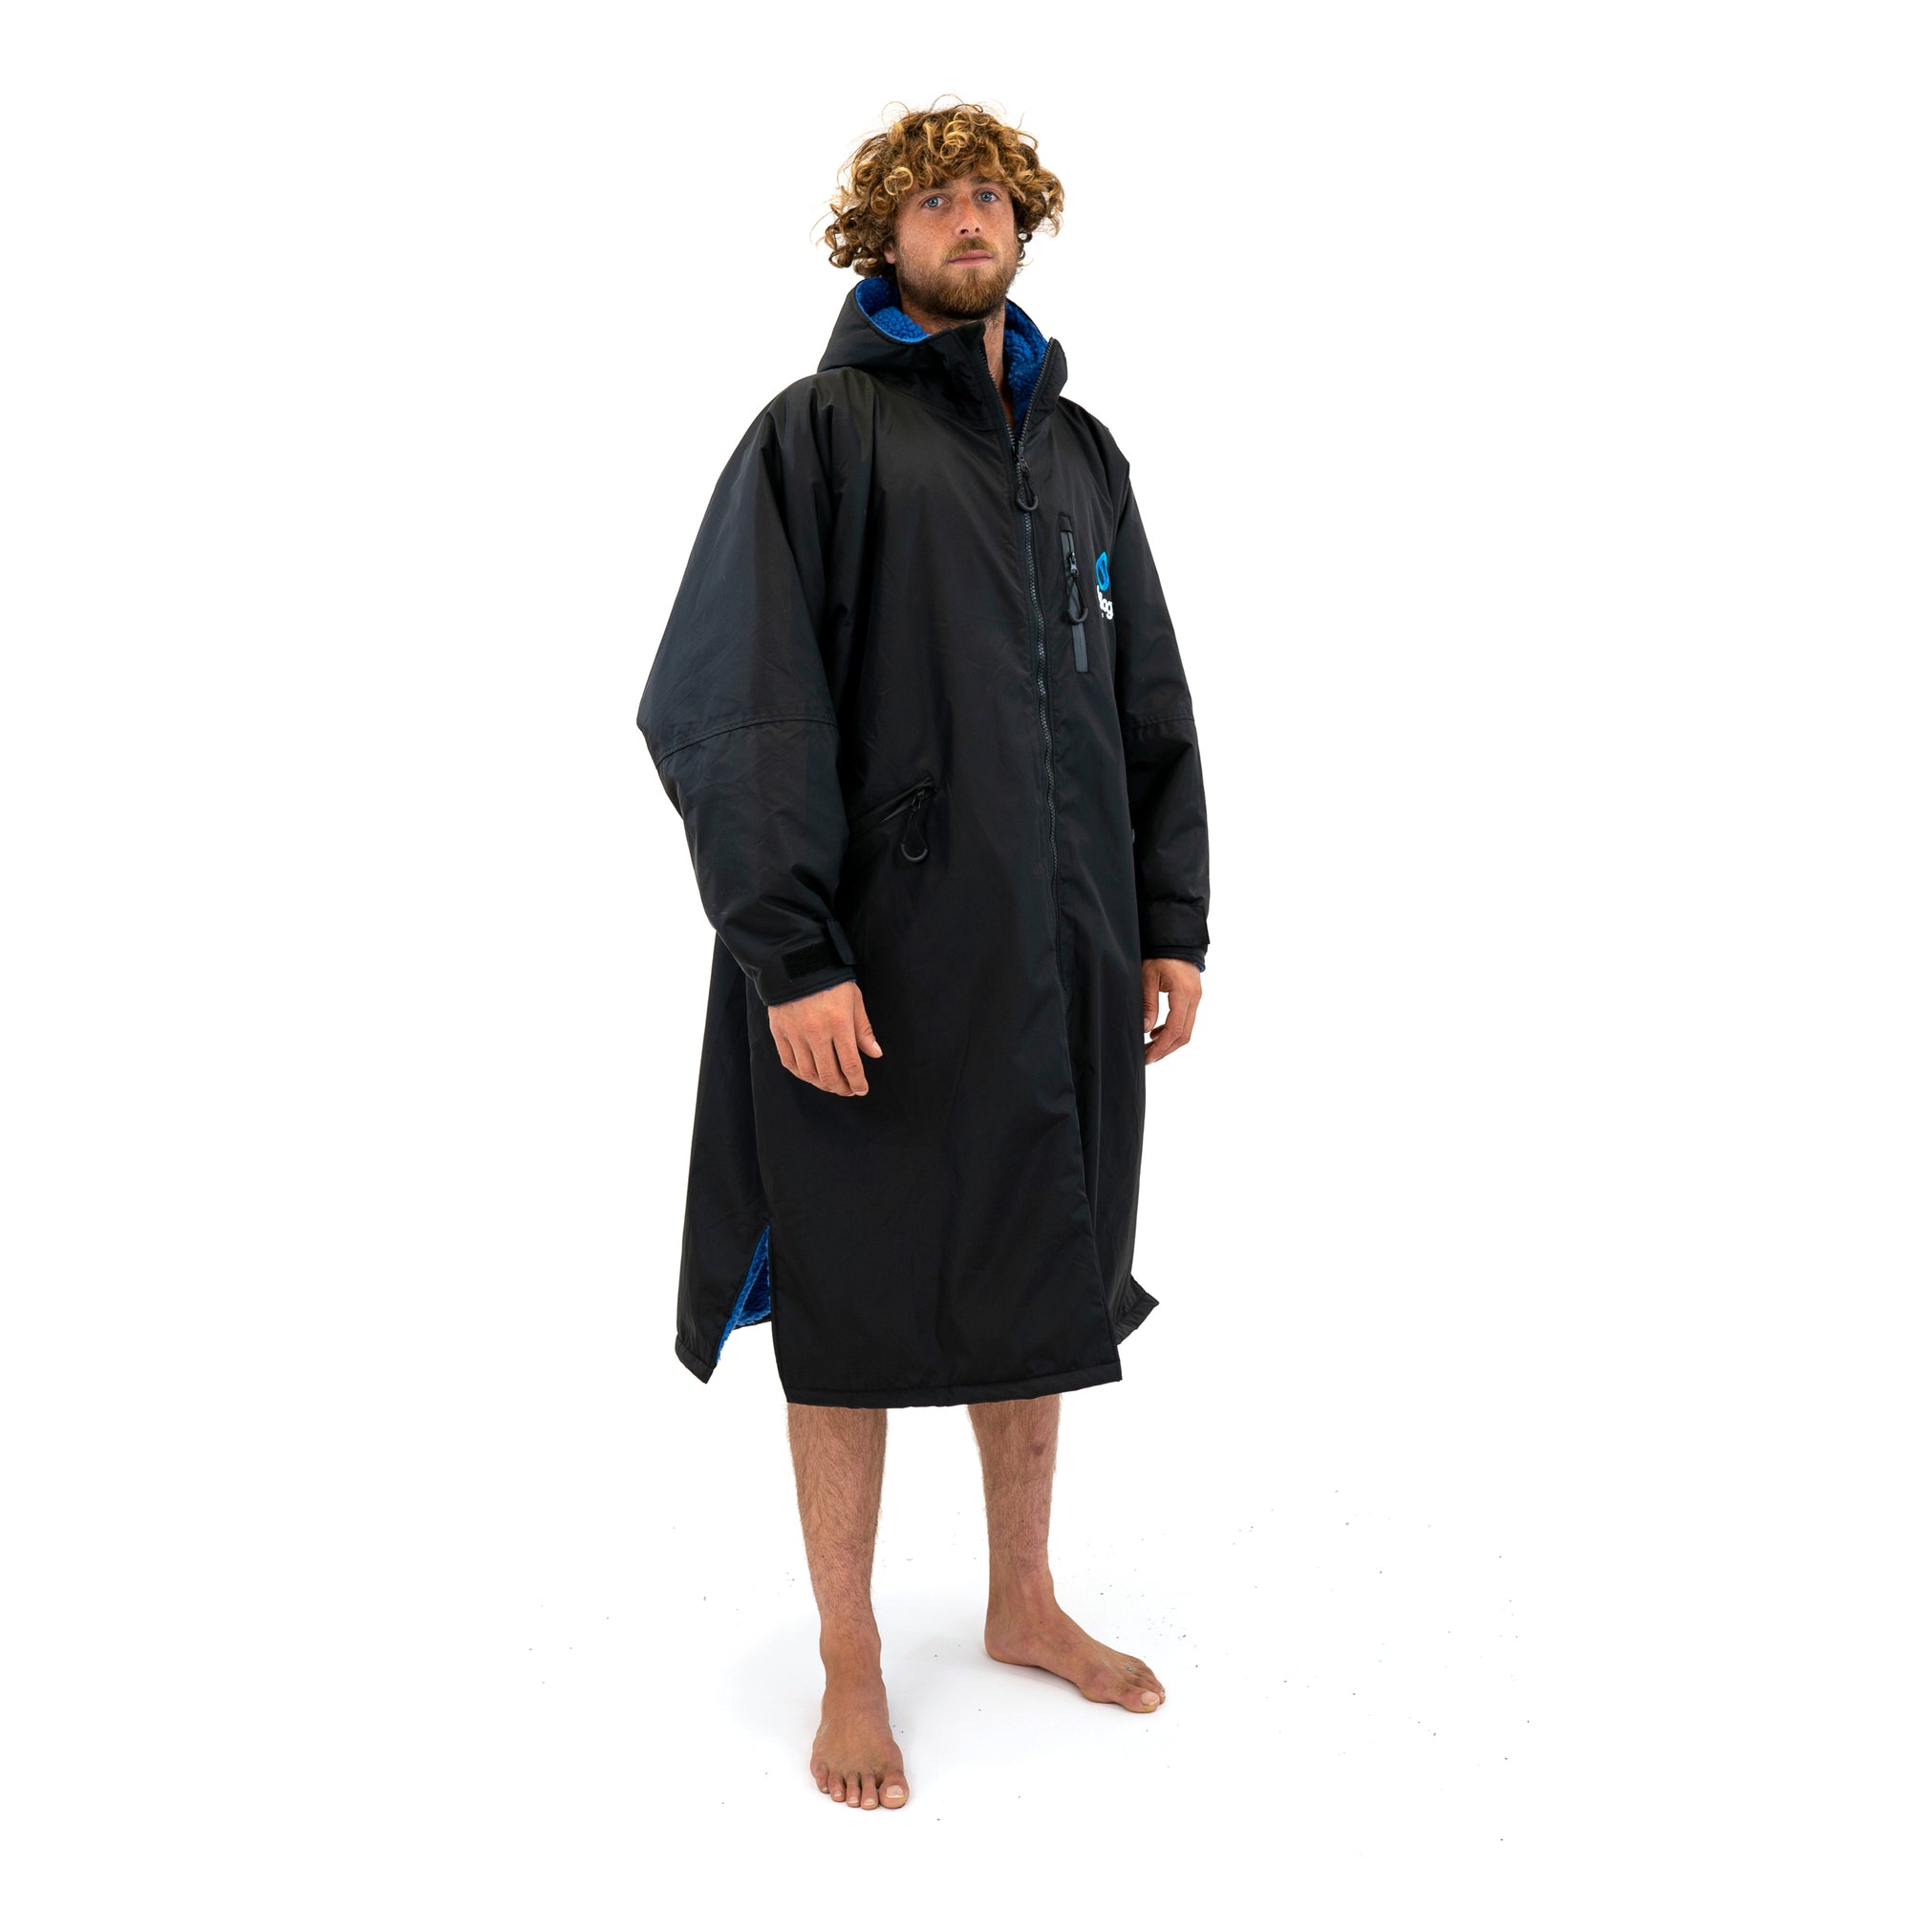 Surflogic Storm Robe (Long Sleeve)